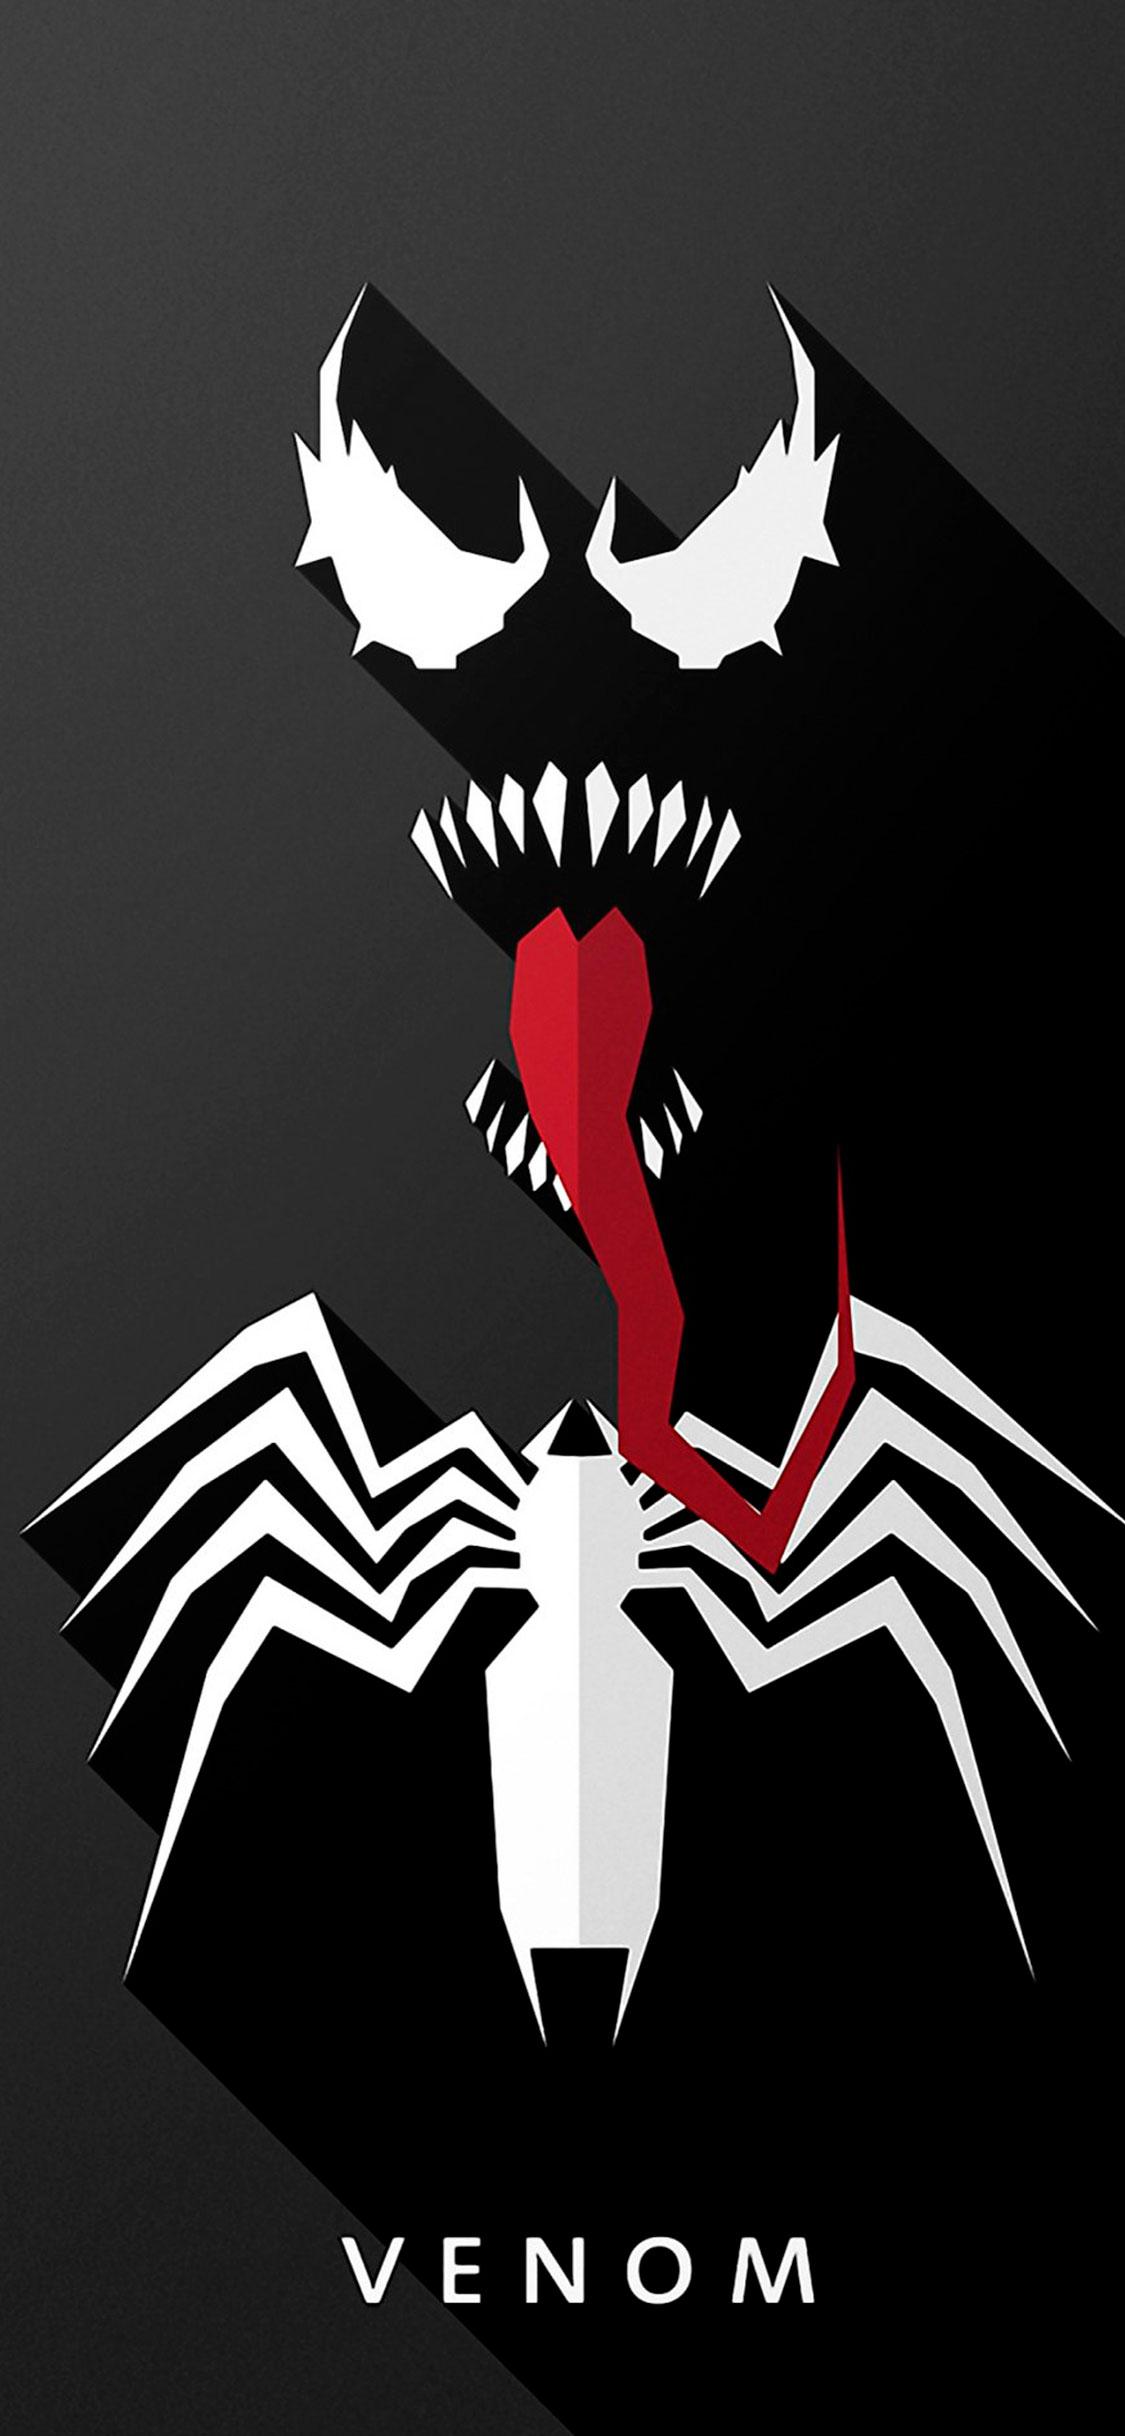 Venom Wallpaper for iPhone Pro Max, X, 6 Download